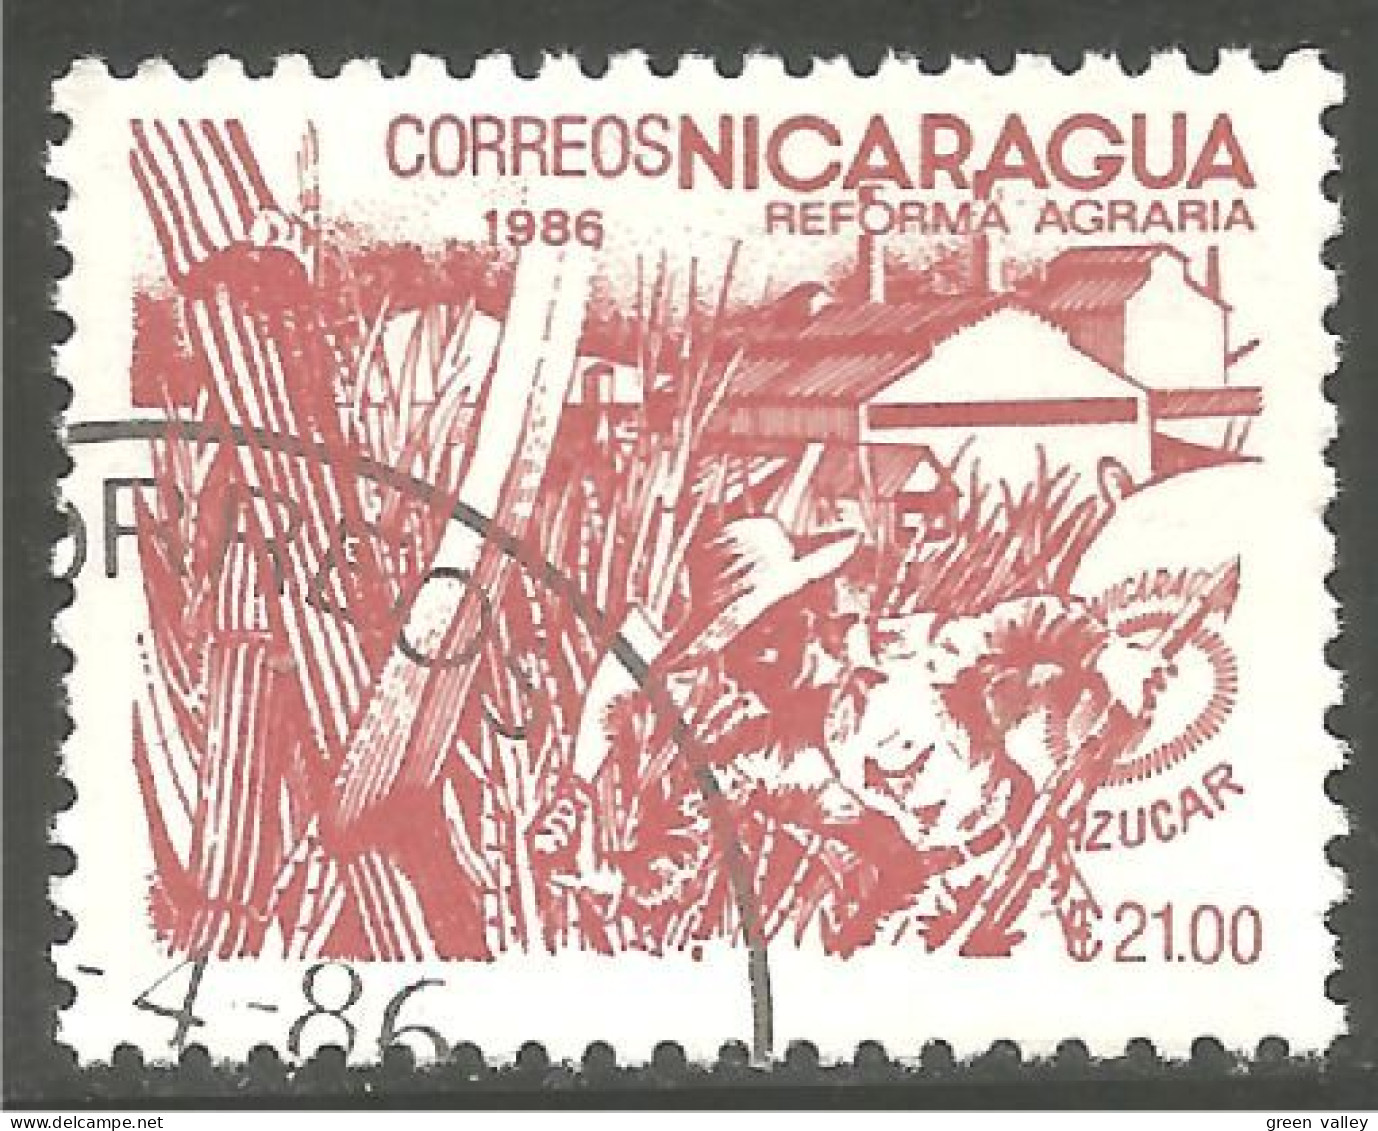 684 Nicaragua Canne Sucre Sugar Cane Zucker Azucar Suiker Zucchero (NIC-475) - Food